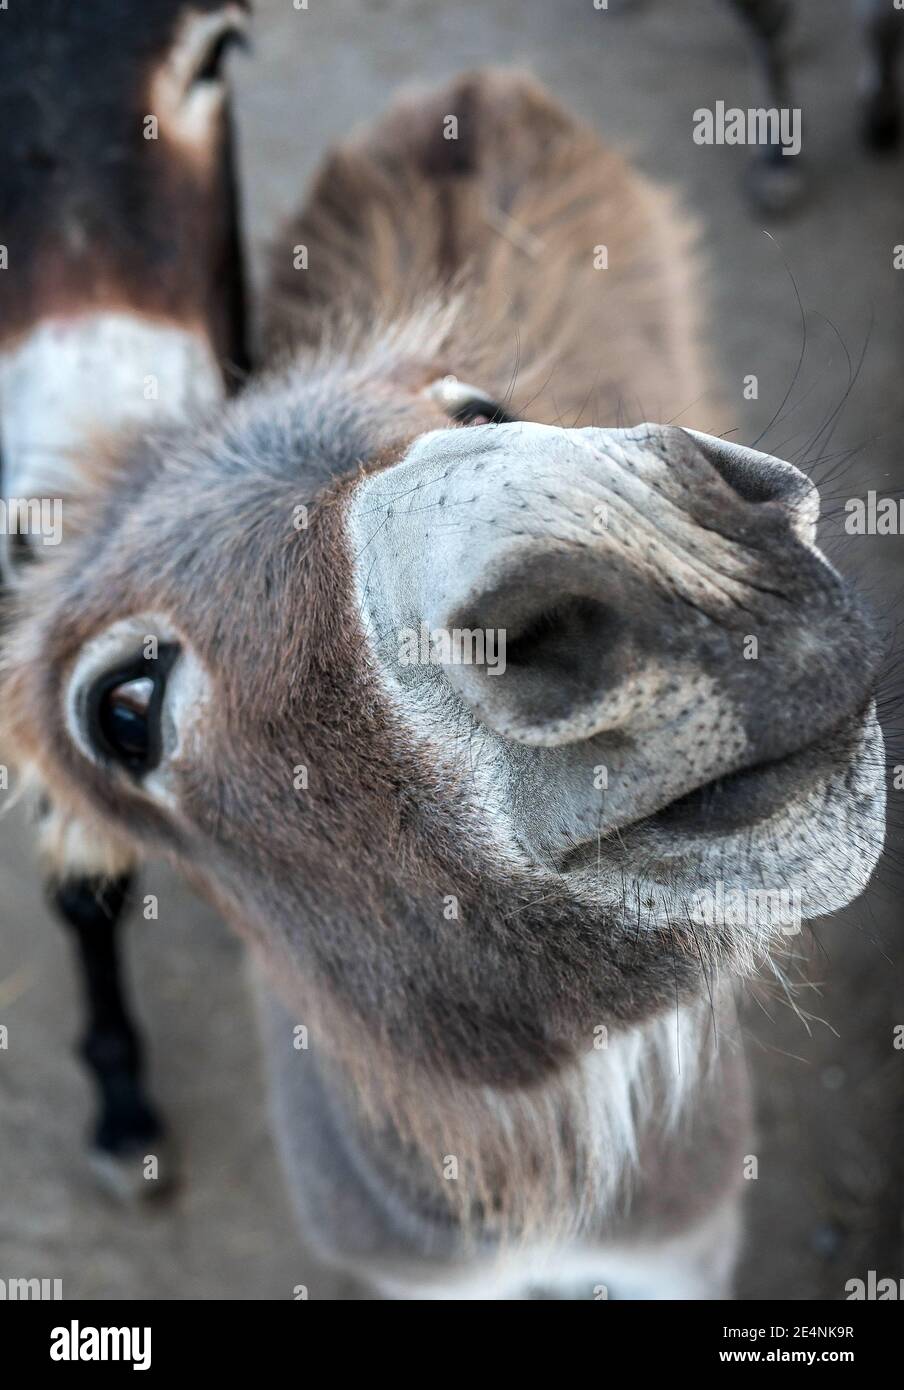 Funny animal looks into the camera lens, donkey close-up face, animal poses  to the camera Stock Photo - Alamy